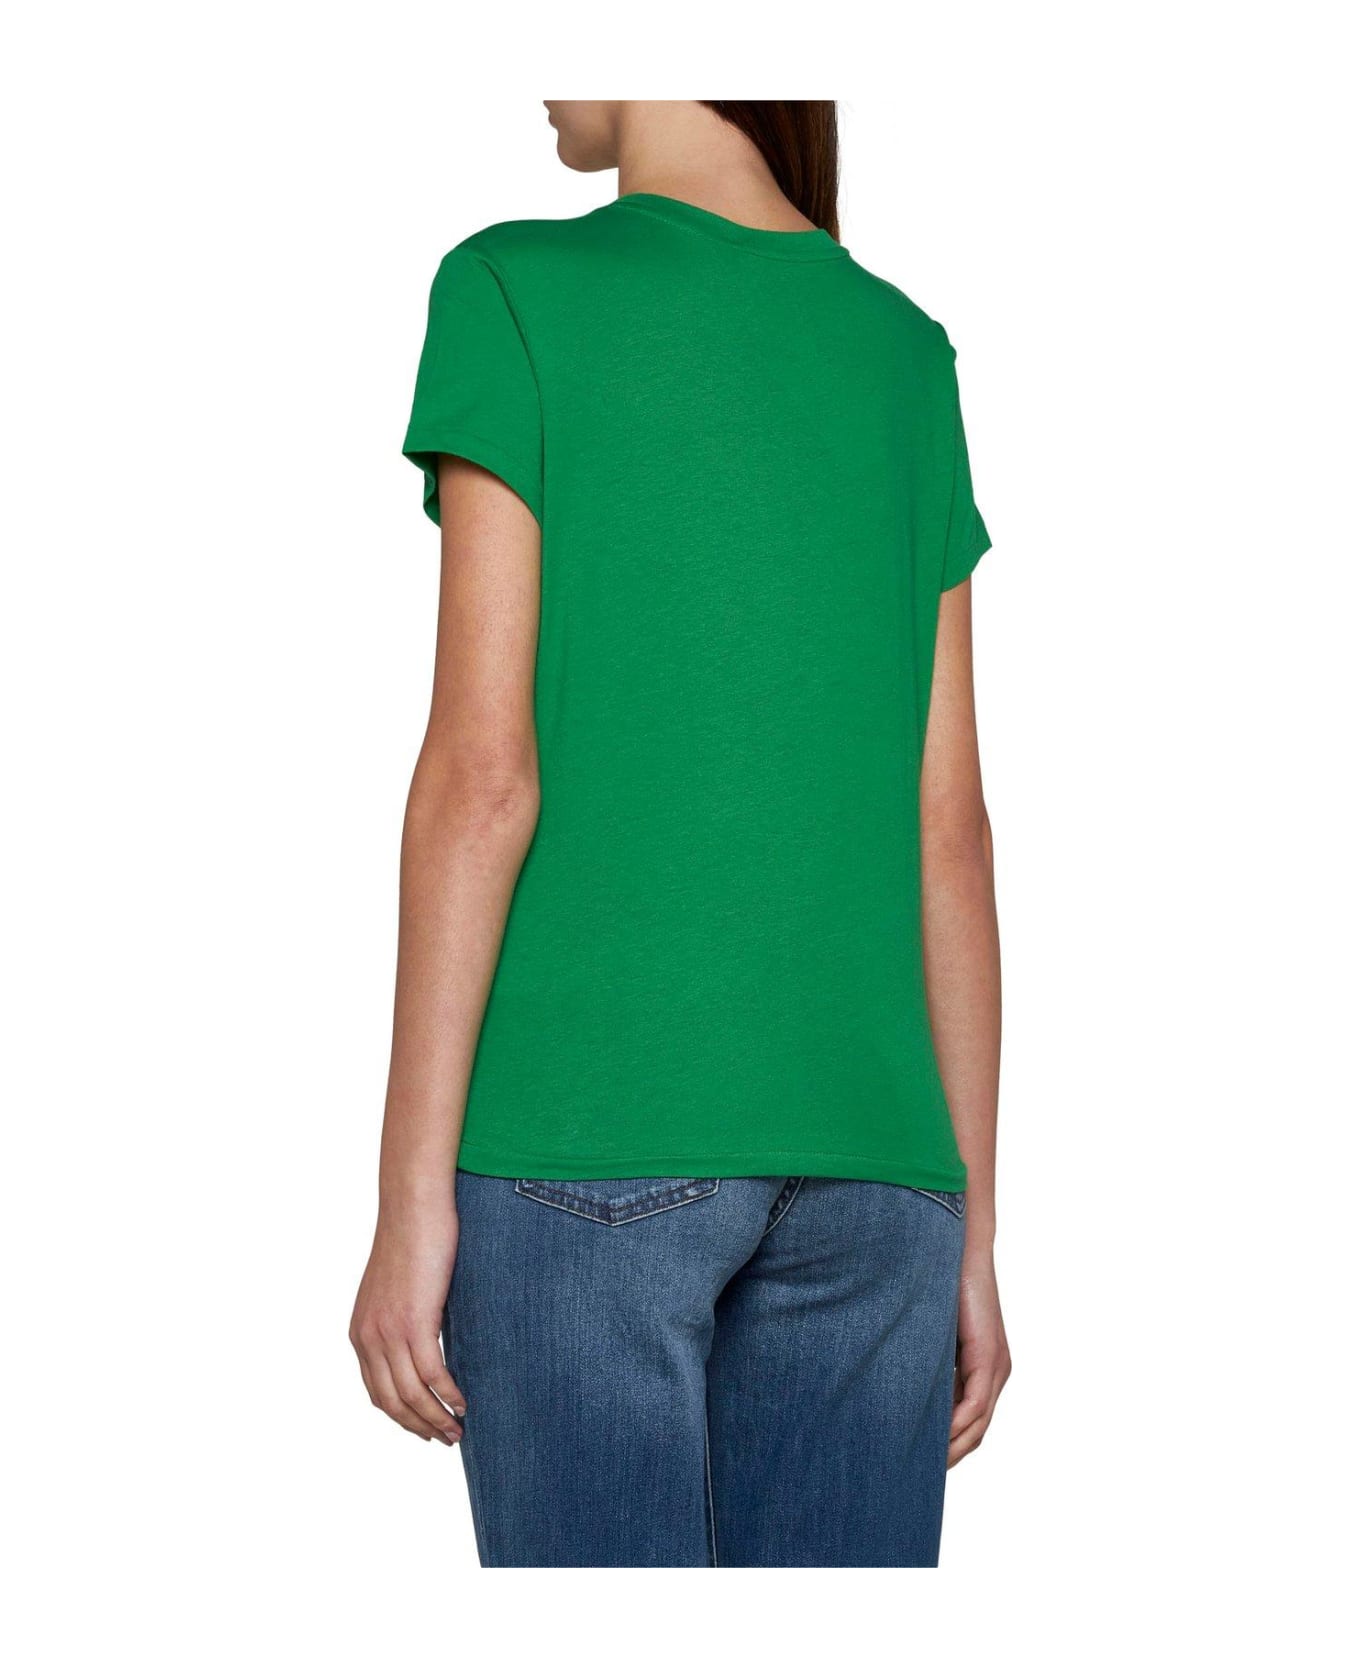 Ralph Lauren Pony Embroidered Crewneck T-shirt - green